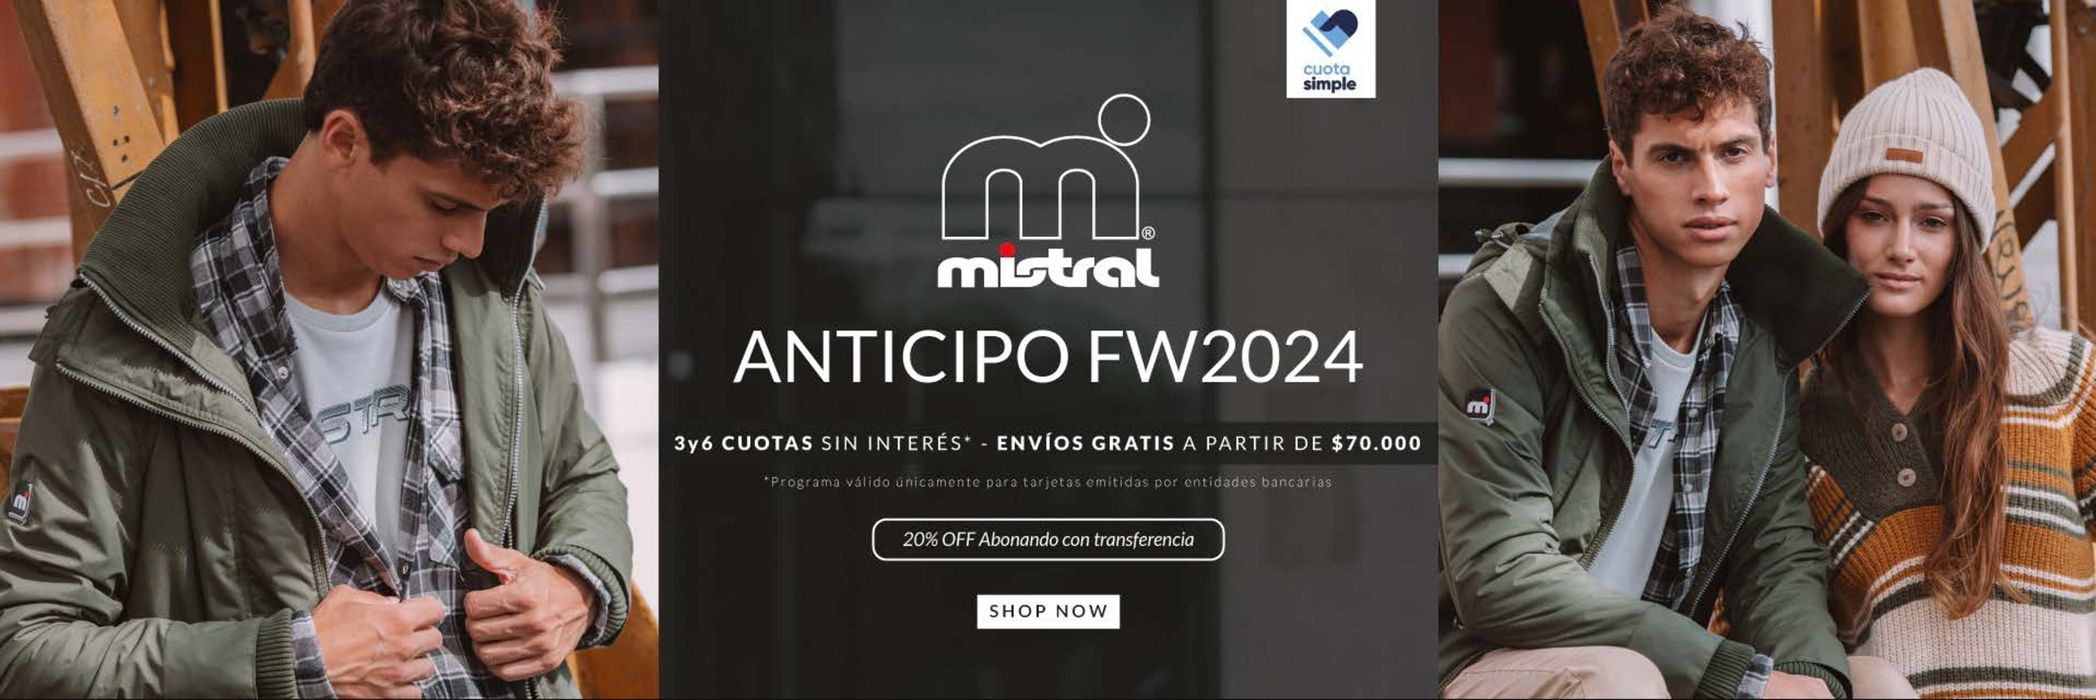 Catálogo Mistral en Buenos Aires | Anticipo FW2024 20% OFF con transferencia | 29/3/2024 - 19/4/2024